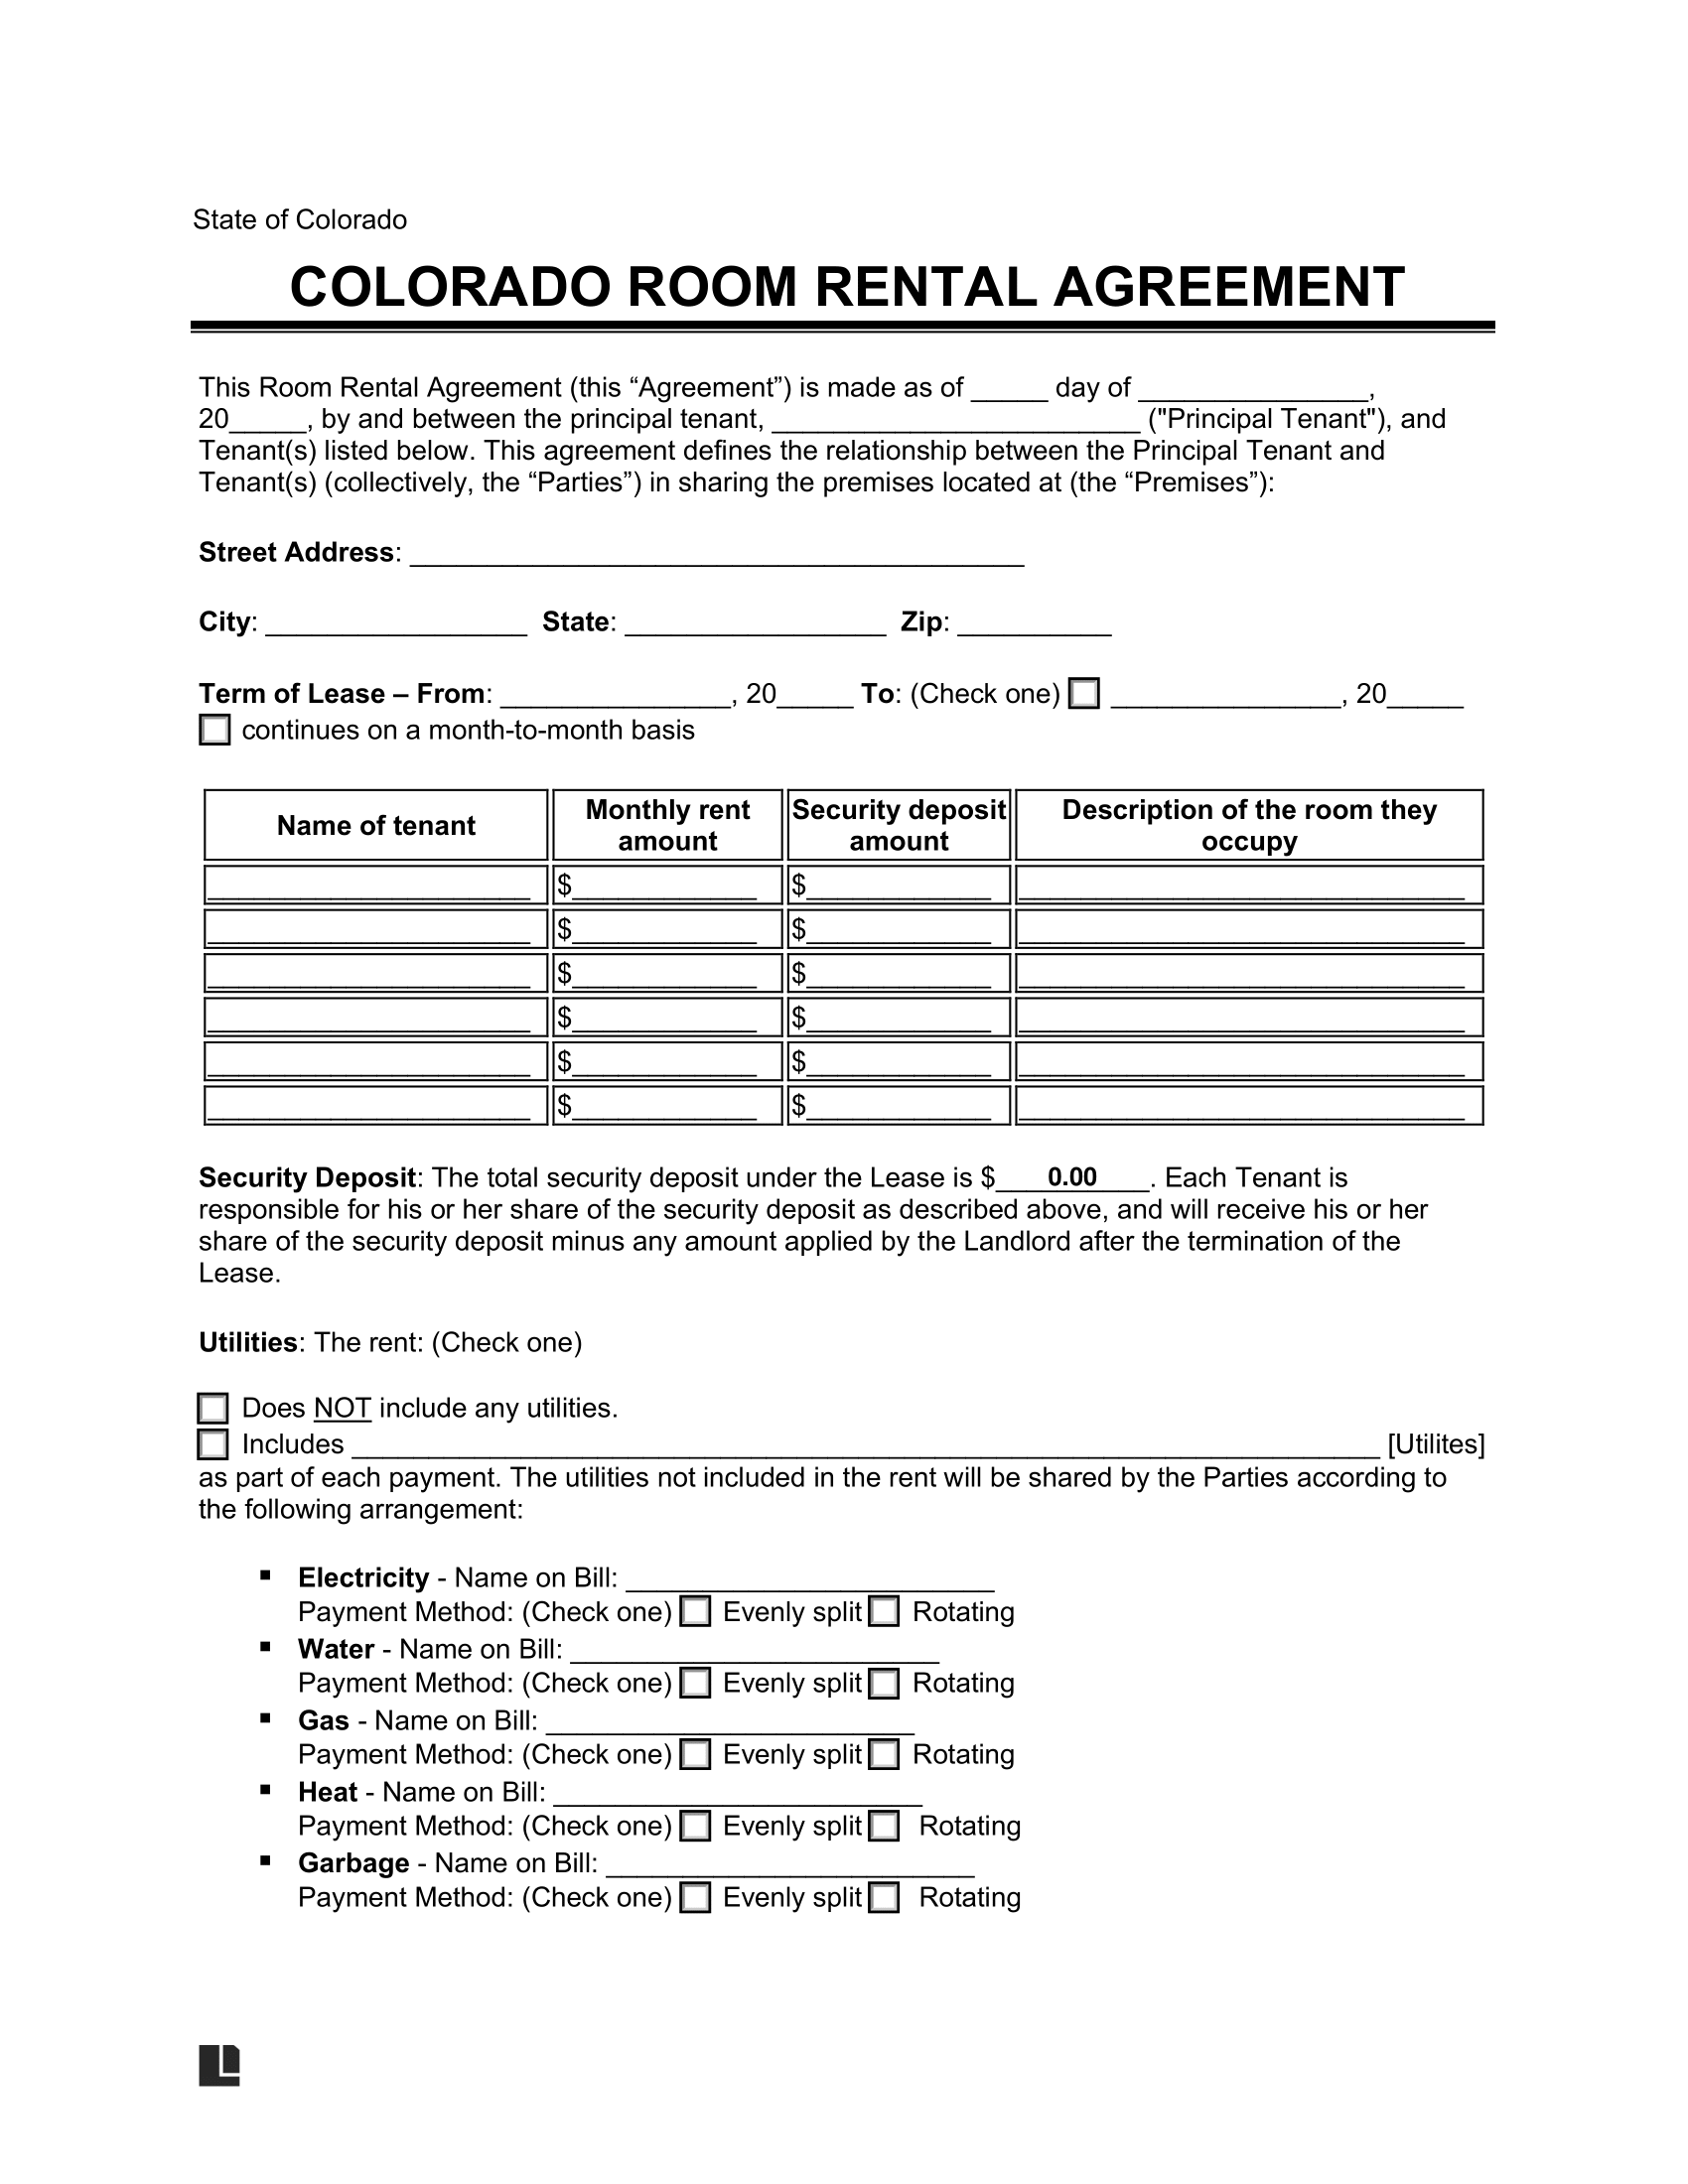 Colorado Room Rental Agreement